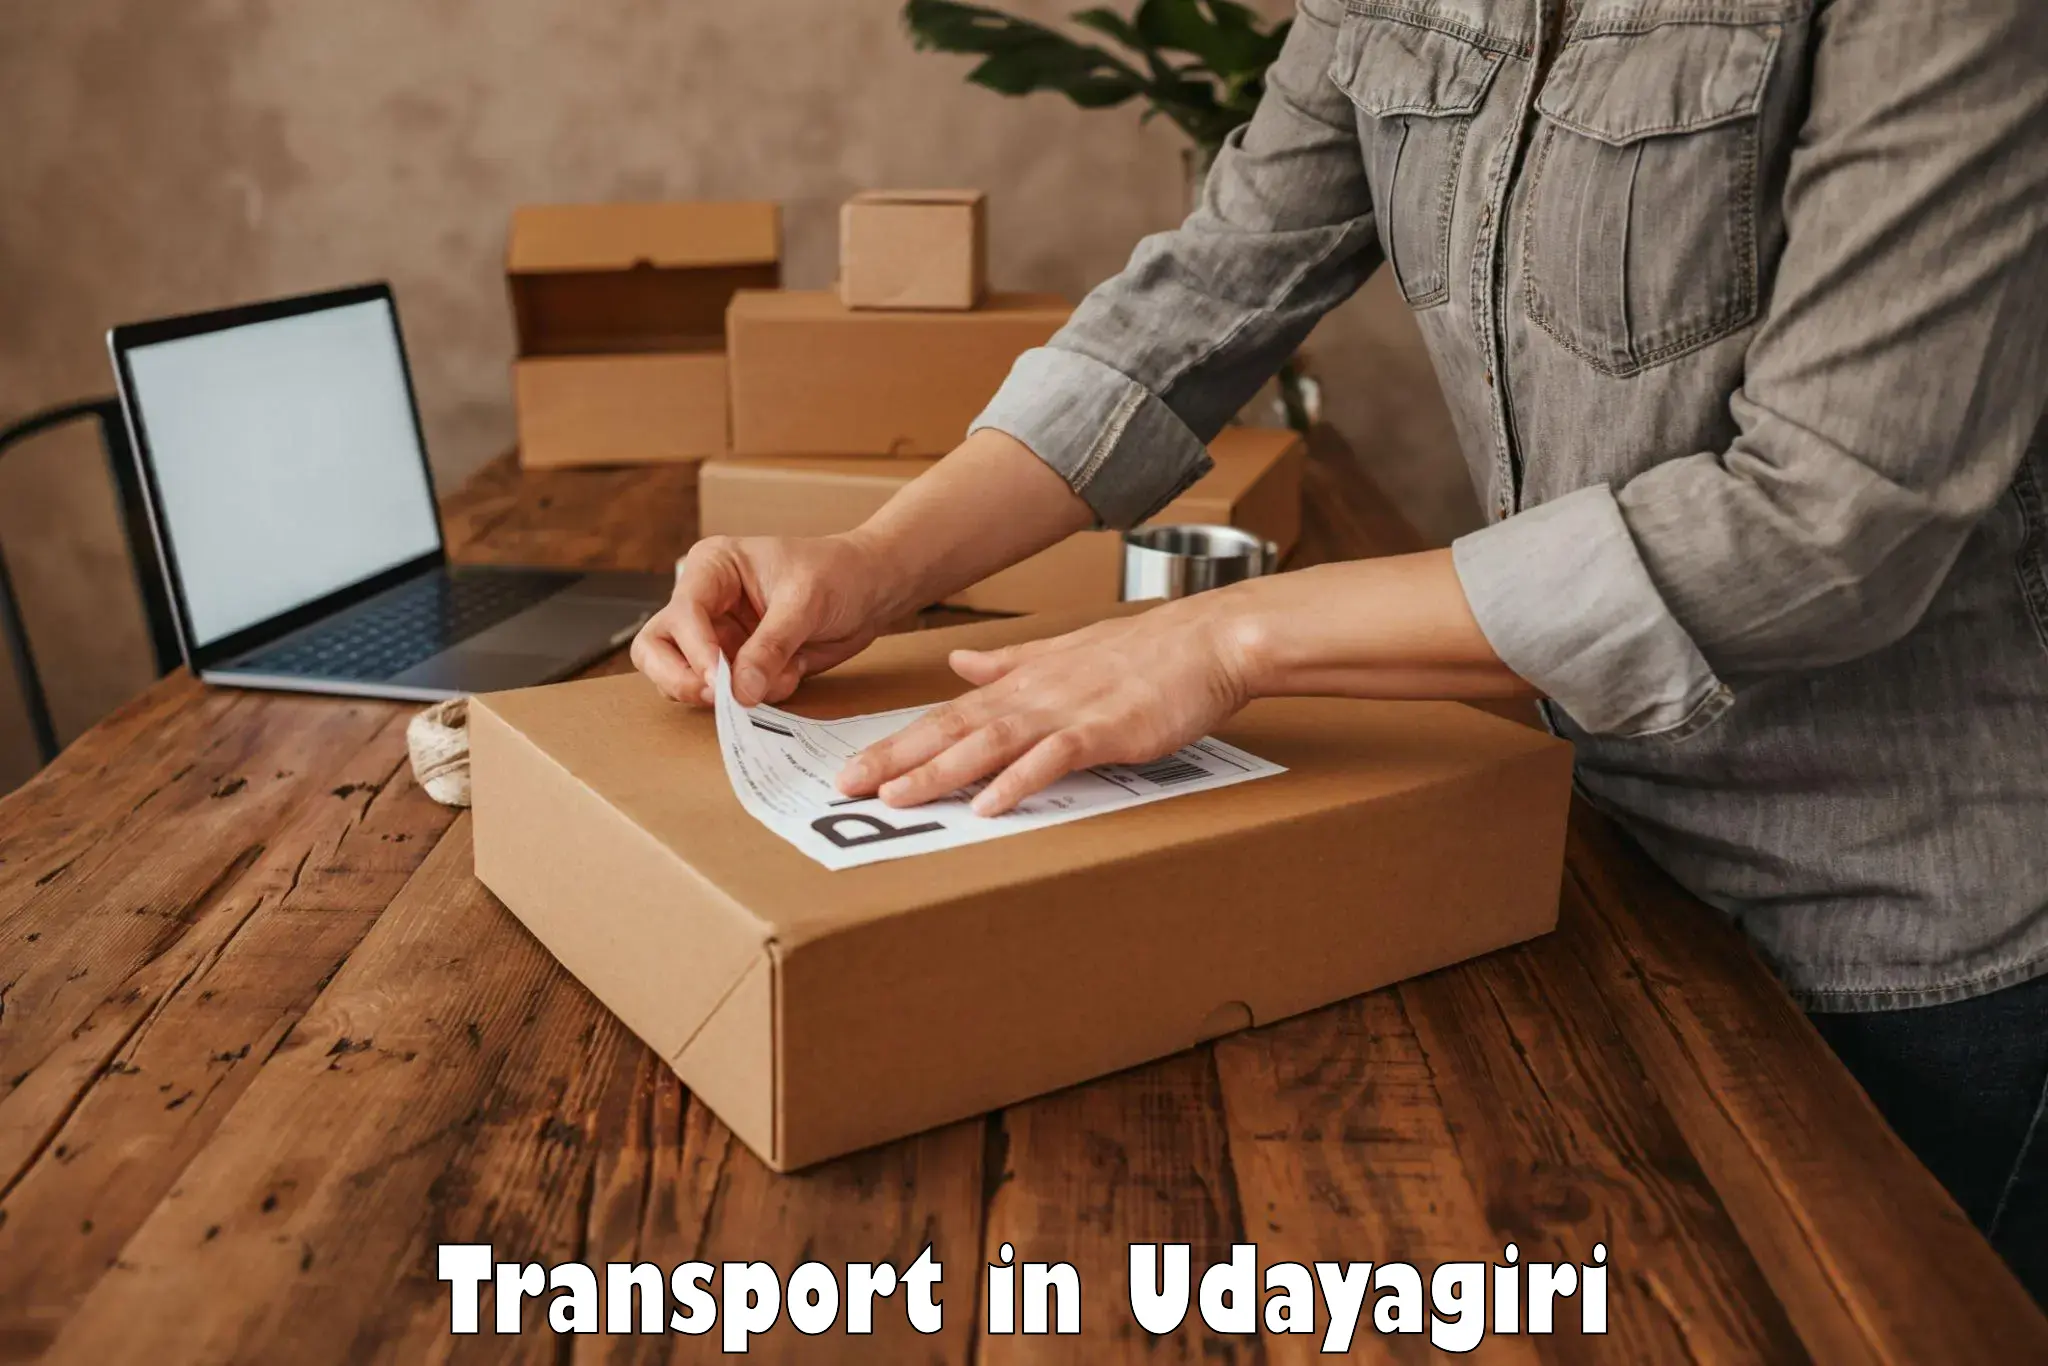 Online transport in Udayagiri